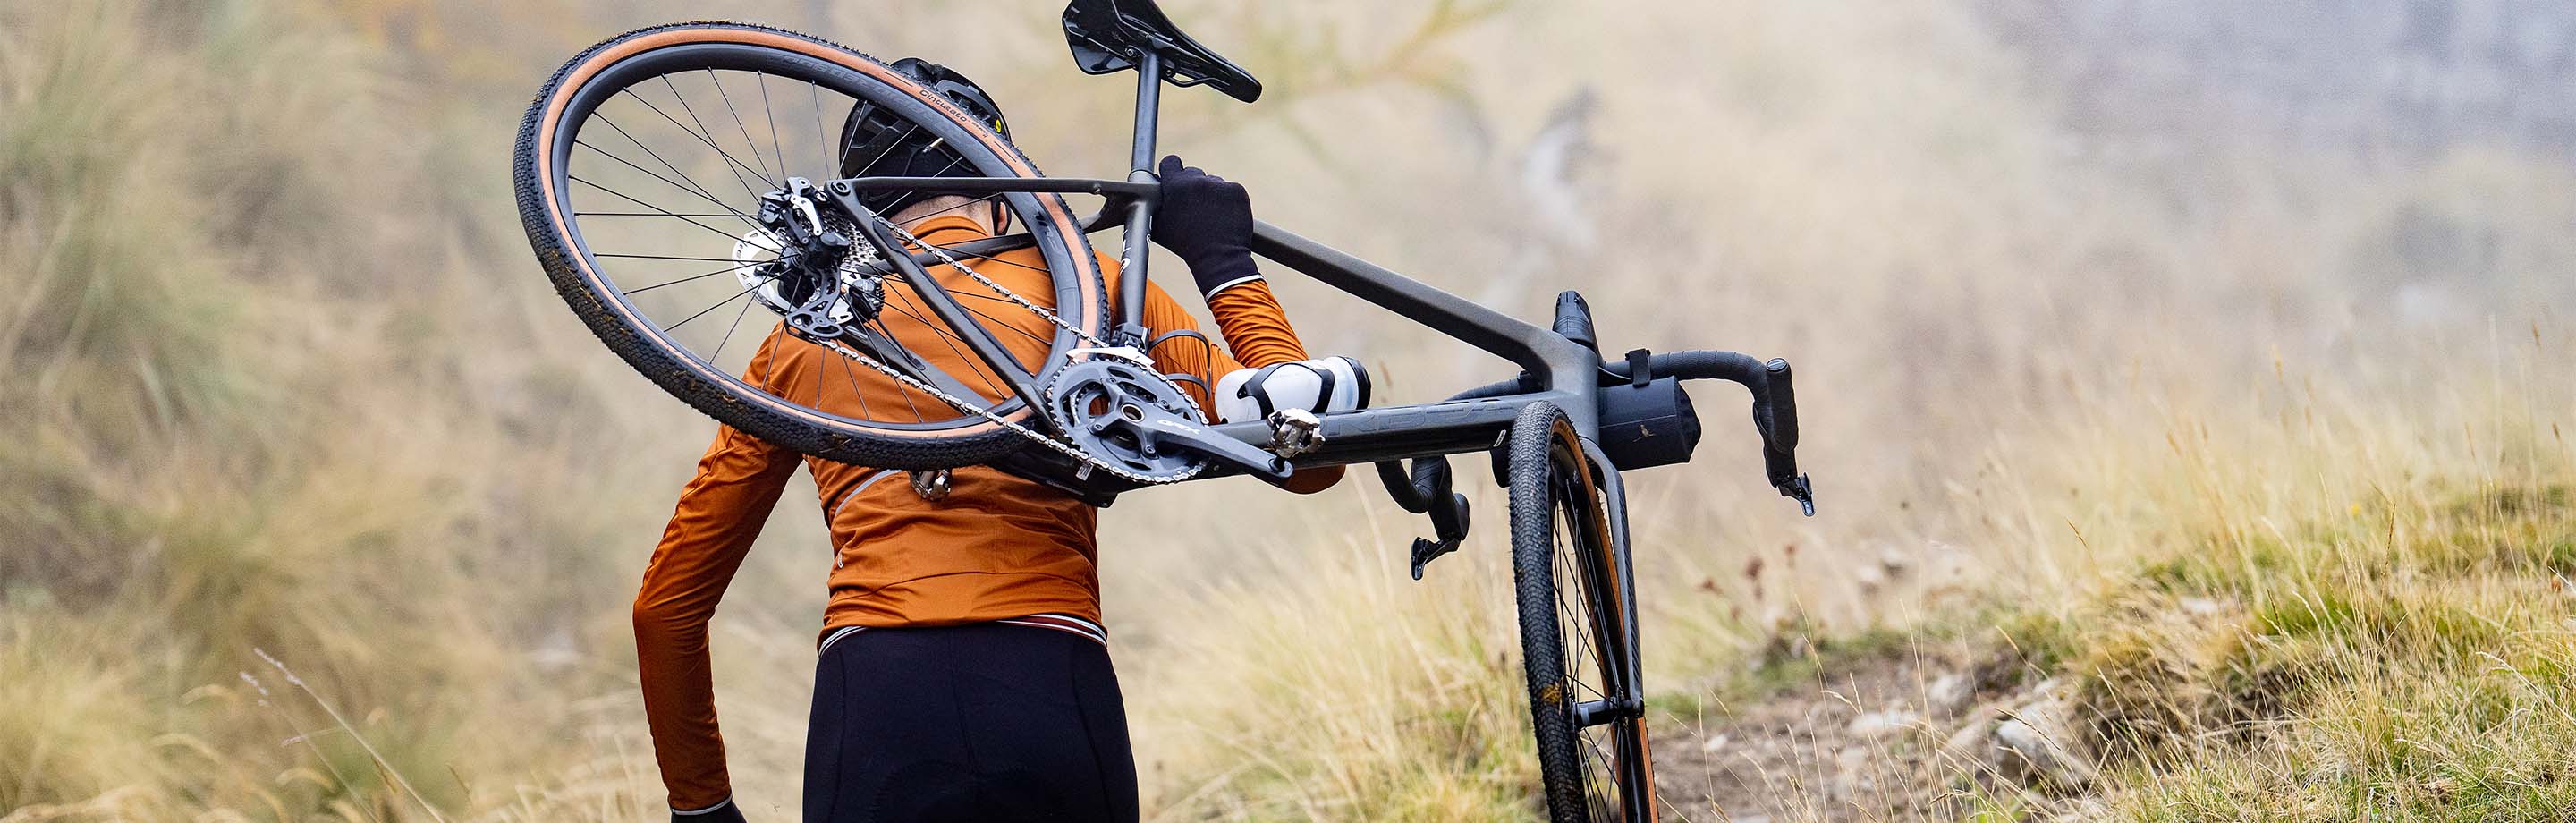 Shimano – High-performance components, bike equipment & bike clothing